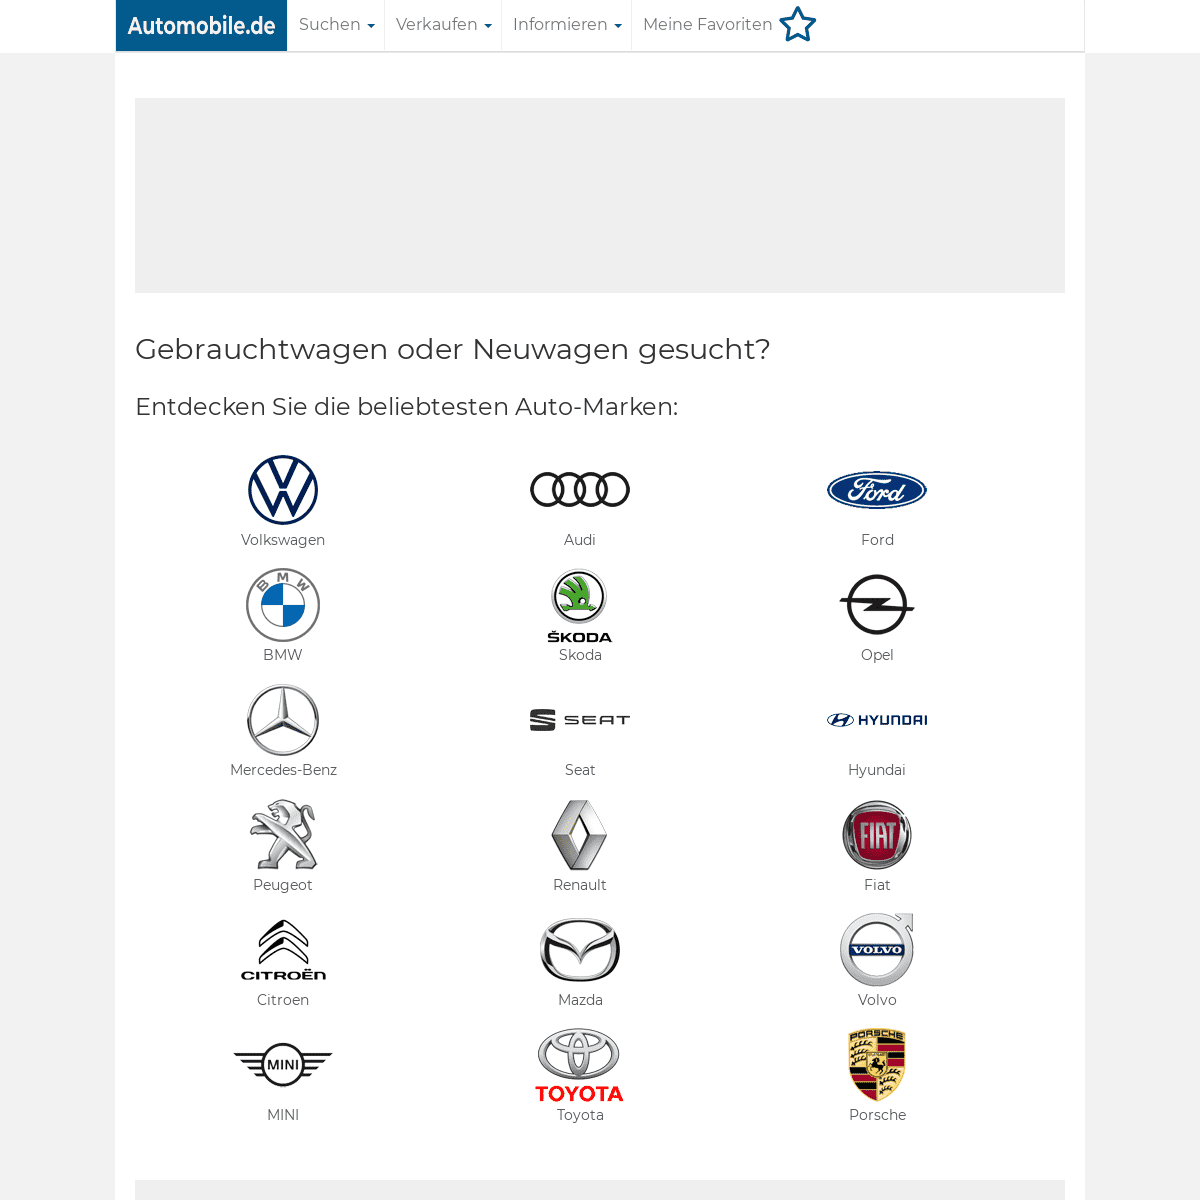 A complete backup of https://automobile.de